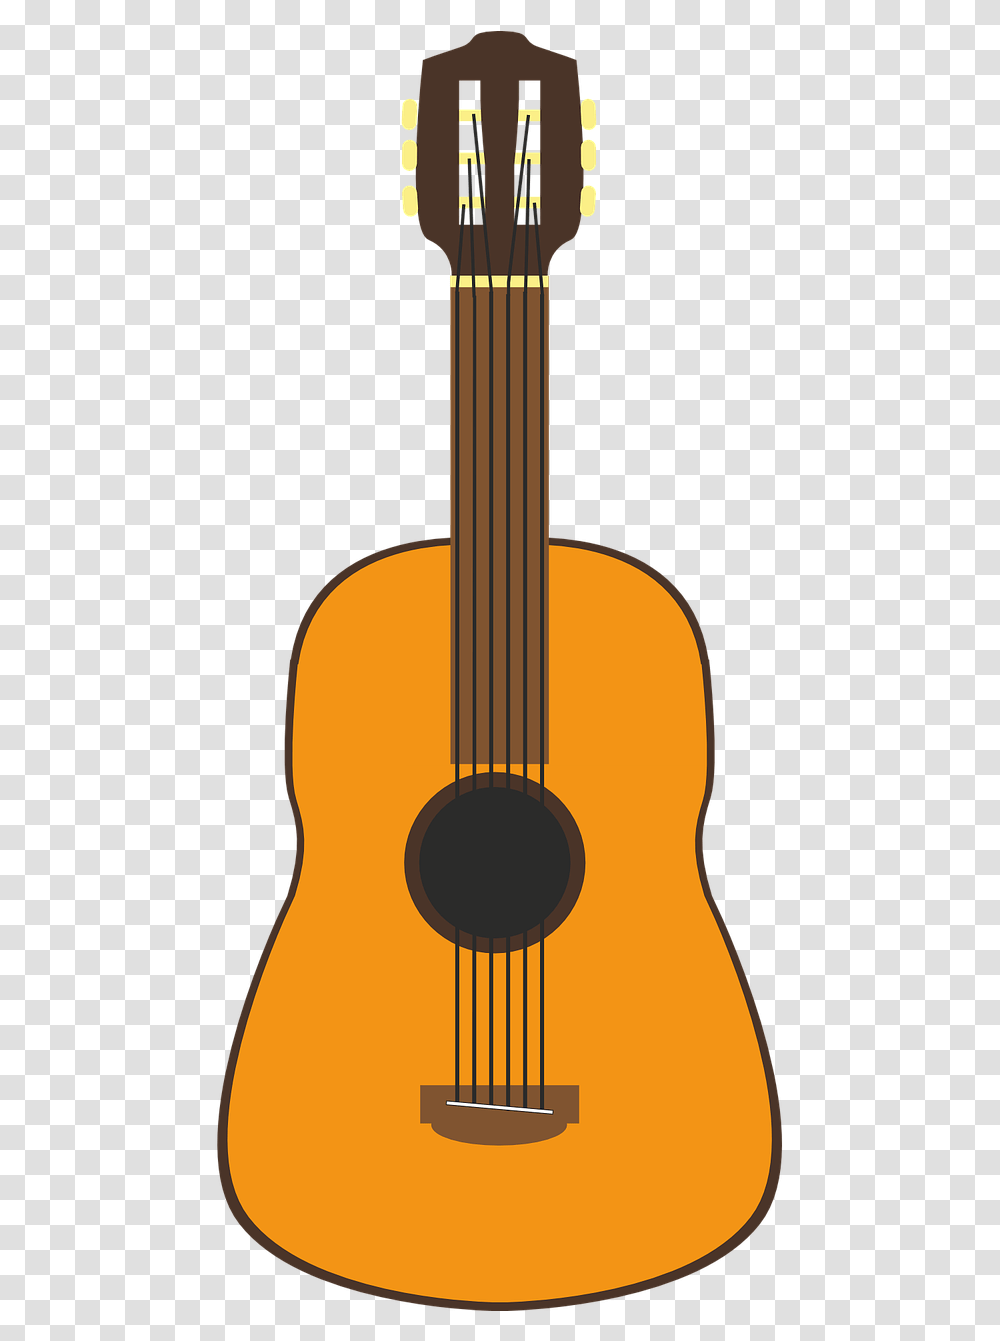 Guitar Vector Music Strings Image Guitar Clipart, Leisure Activities, Musical Instrument, Bass Guitar Transparent Png